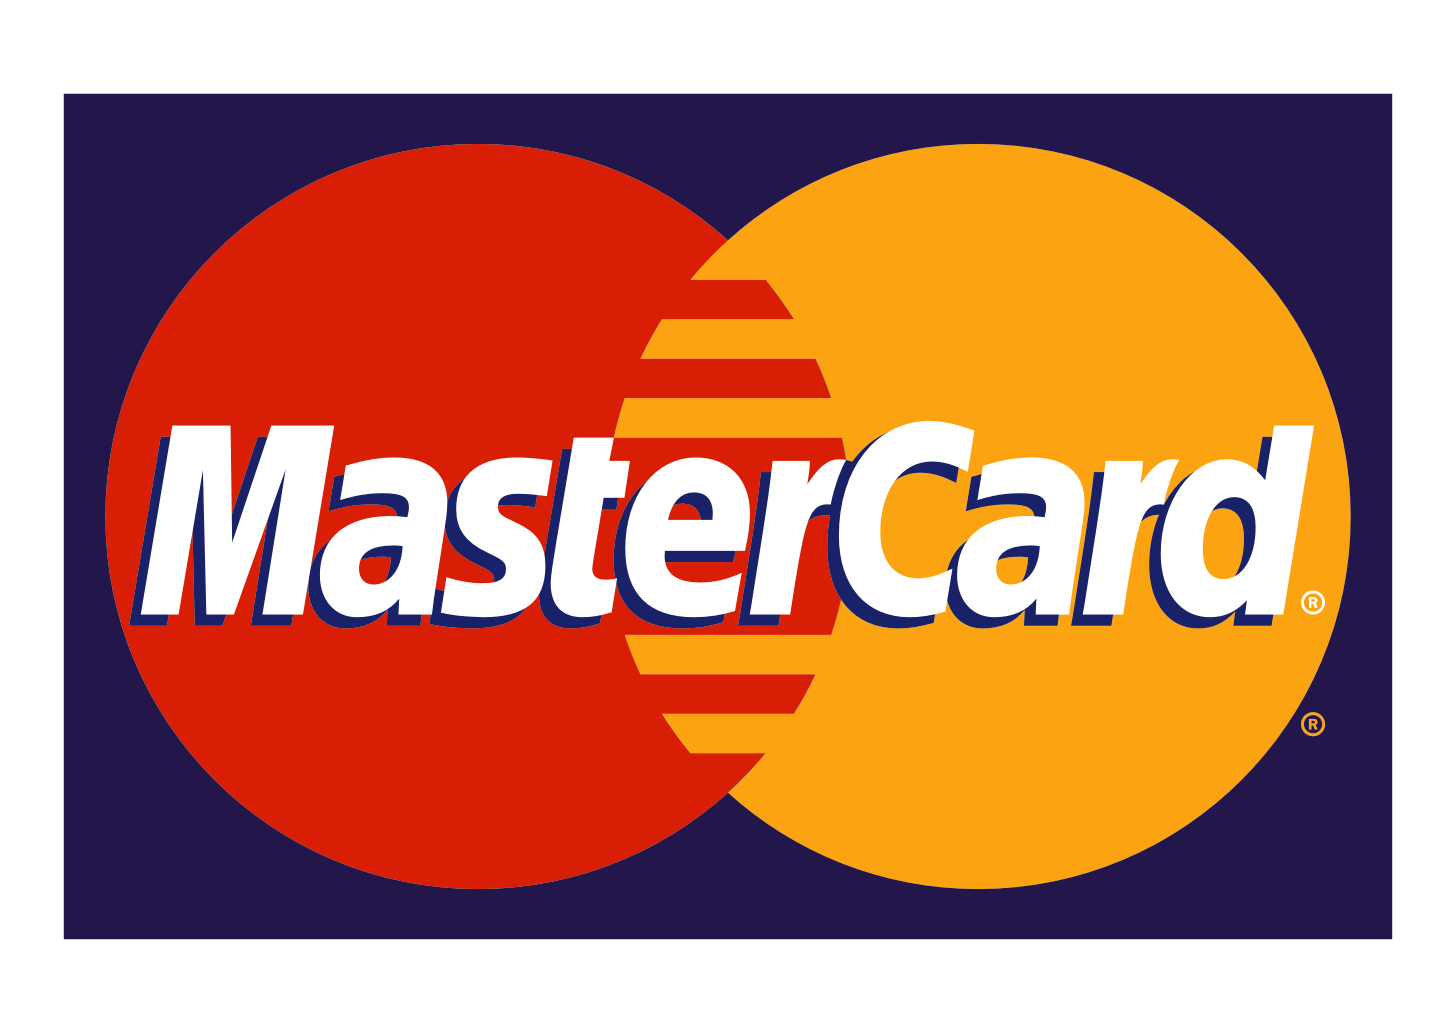 Credit Card Visa And Master C